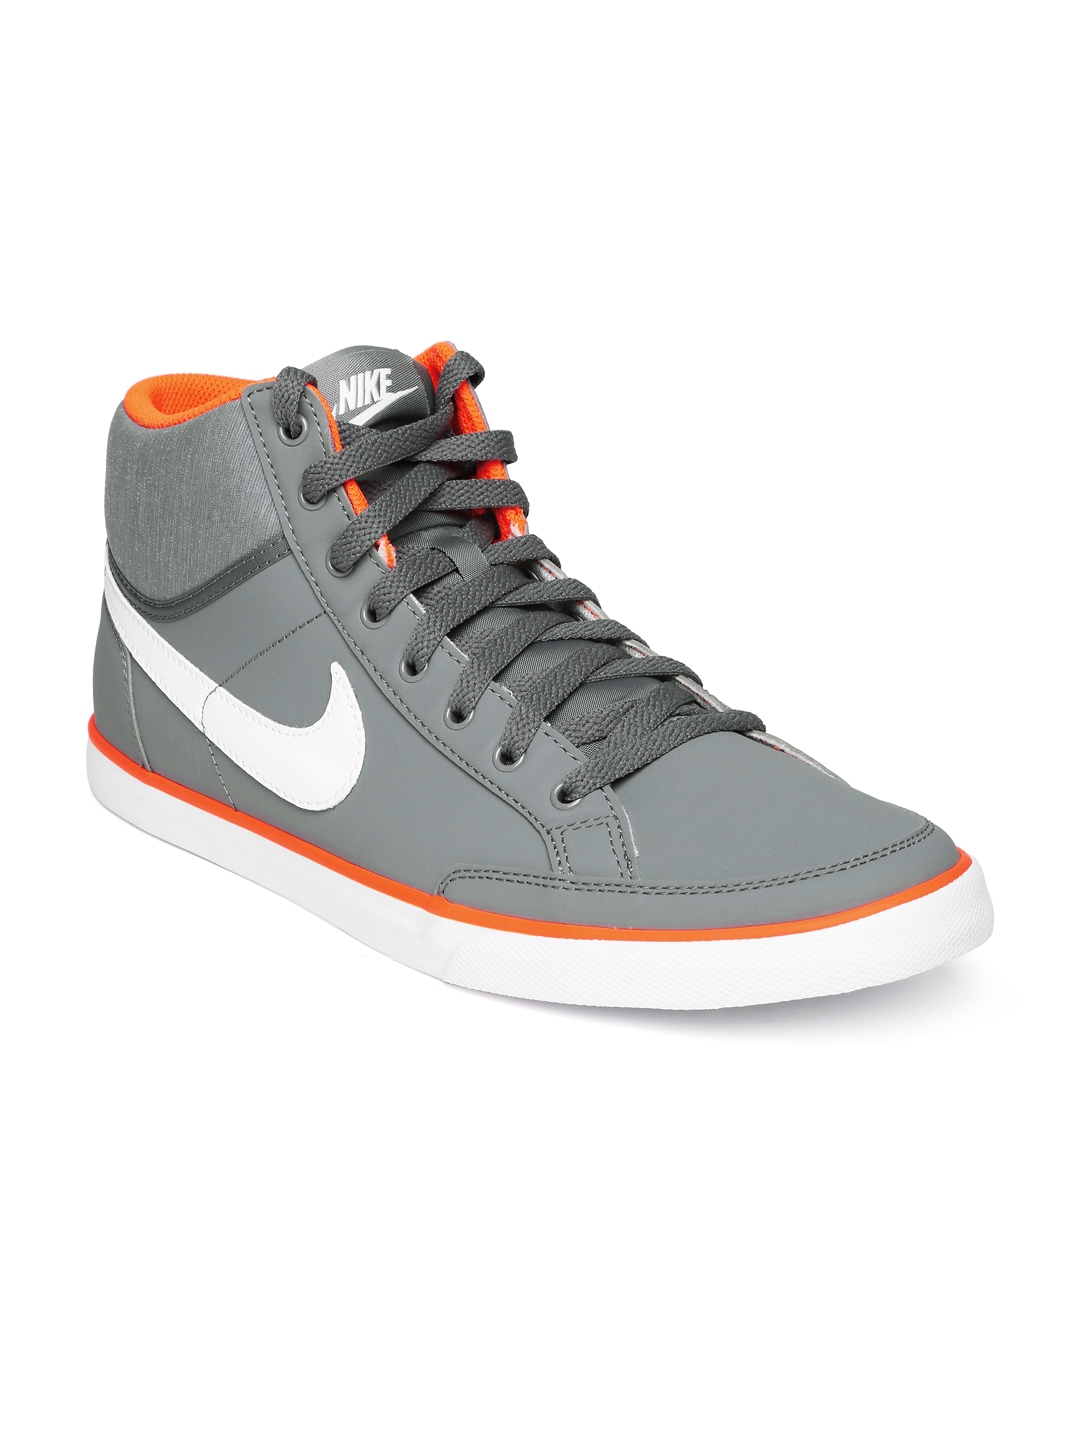 Aanvrager Overname draadloos Buy Nike Men Grey Capri III Leather Casual Shoes - Casual Shoes for Men  857265 | Myntra